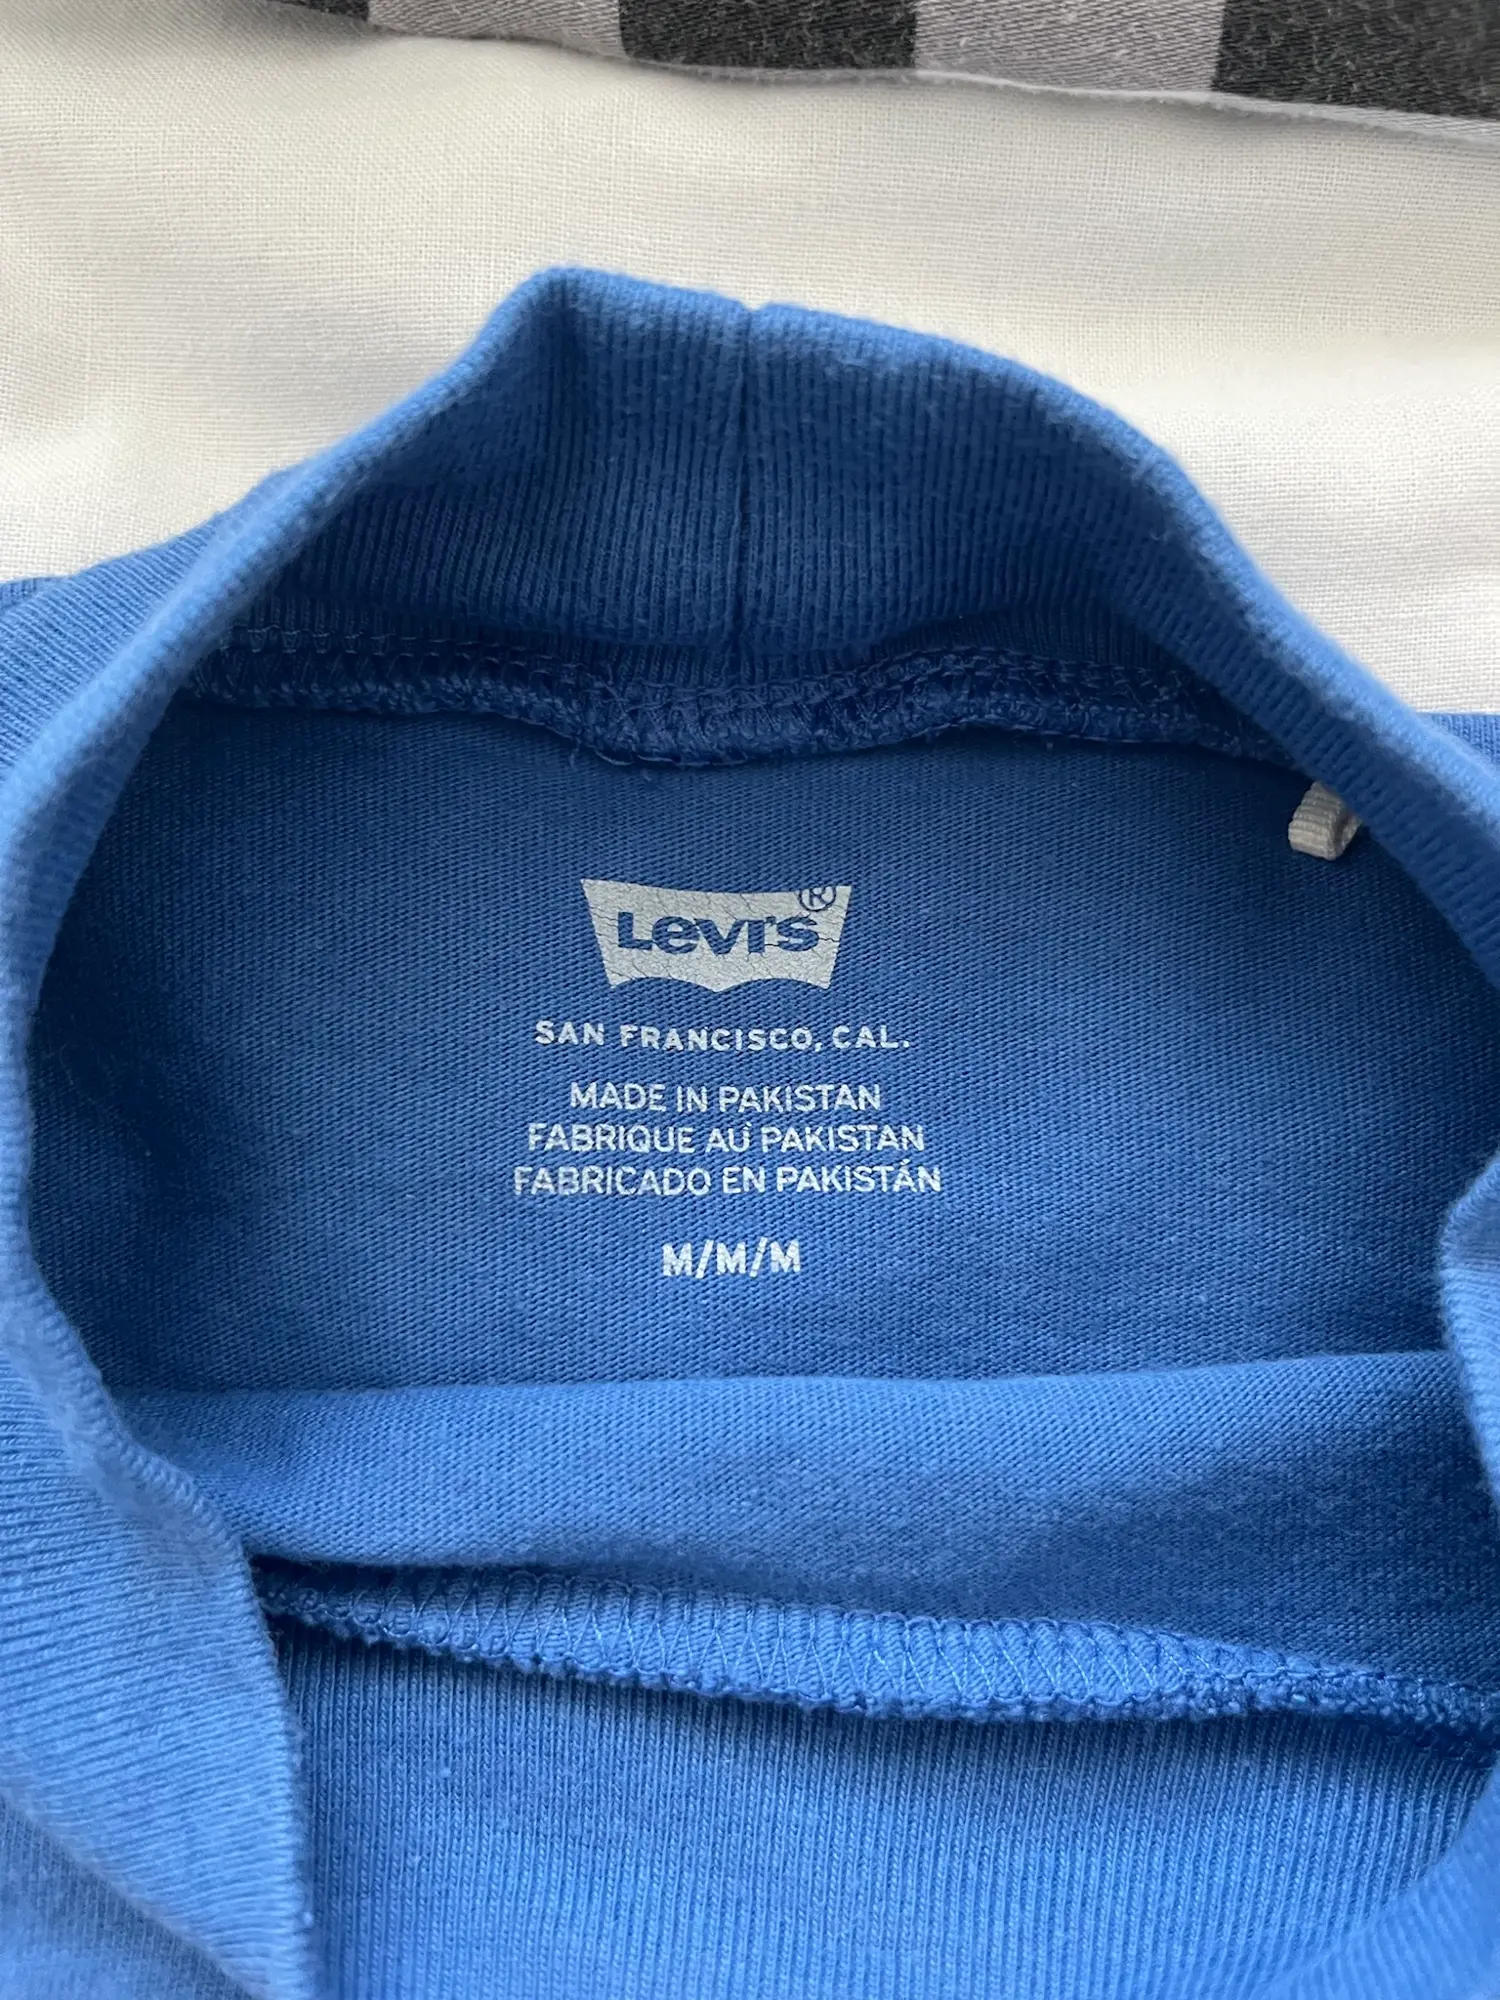 Levi's Vintage Clothing bluse